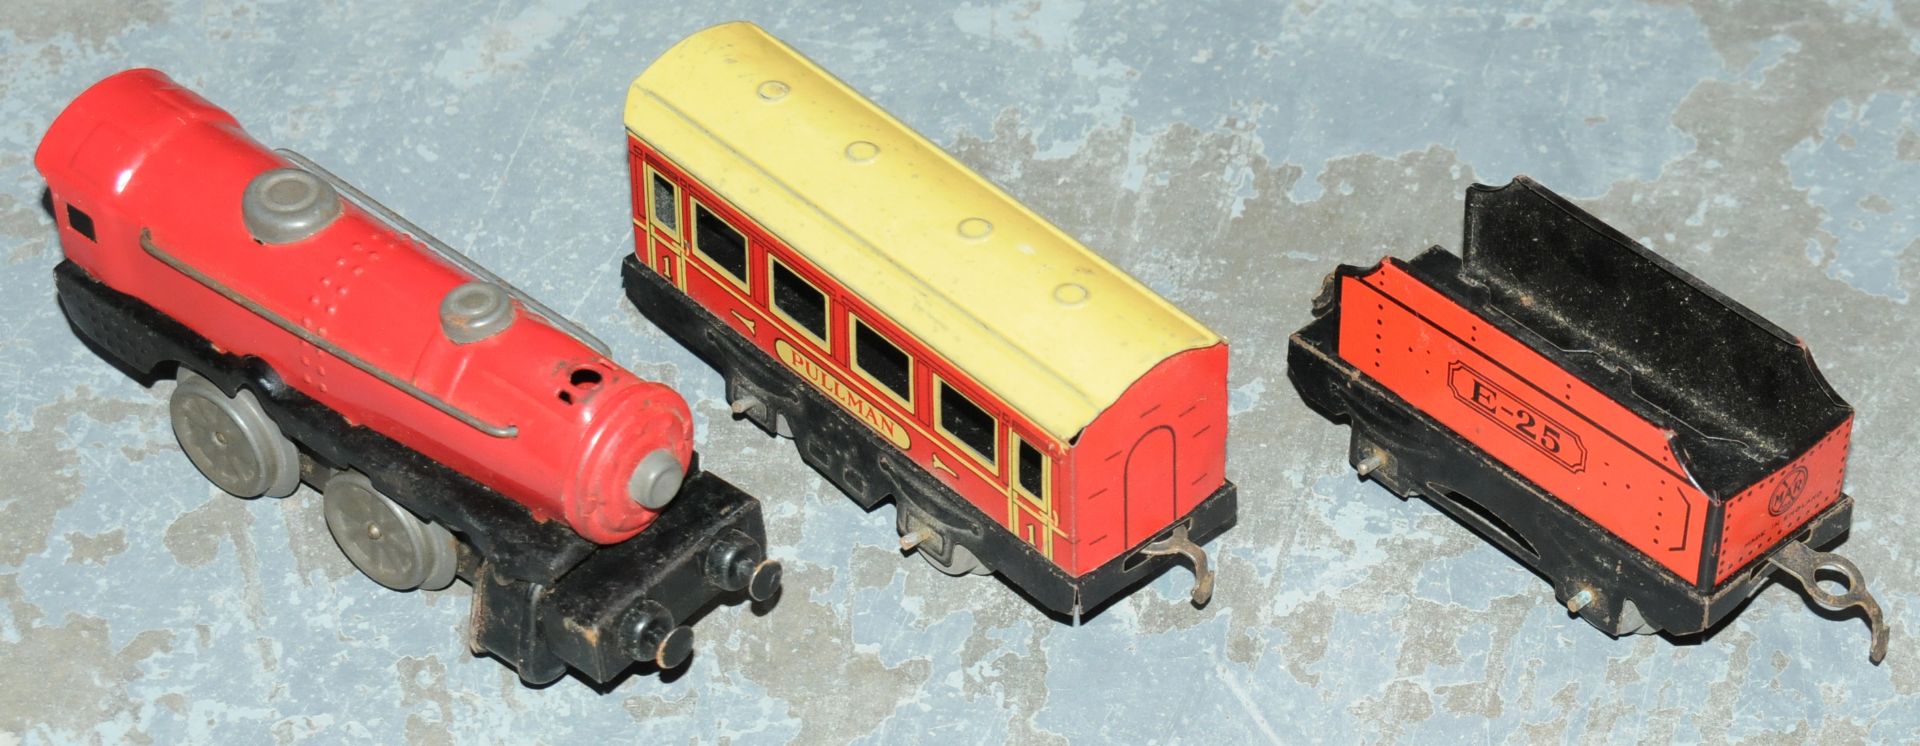 Marx Toys Clockwork Tinplate Trains Set - Image 3 of 6